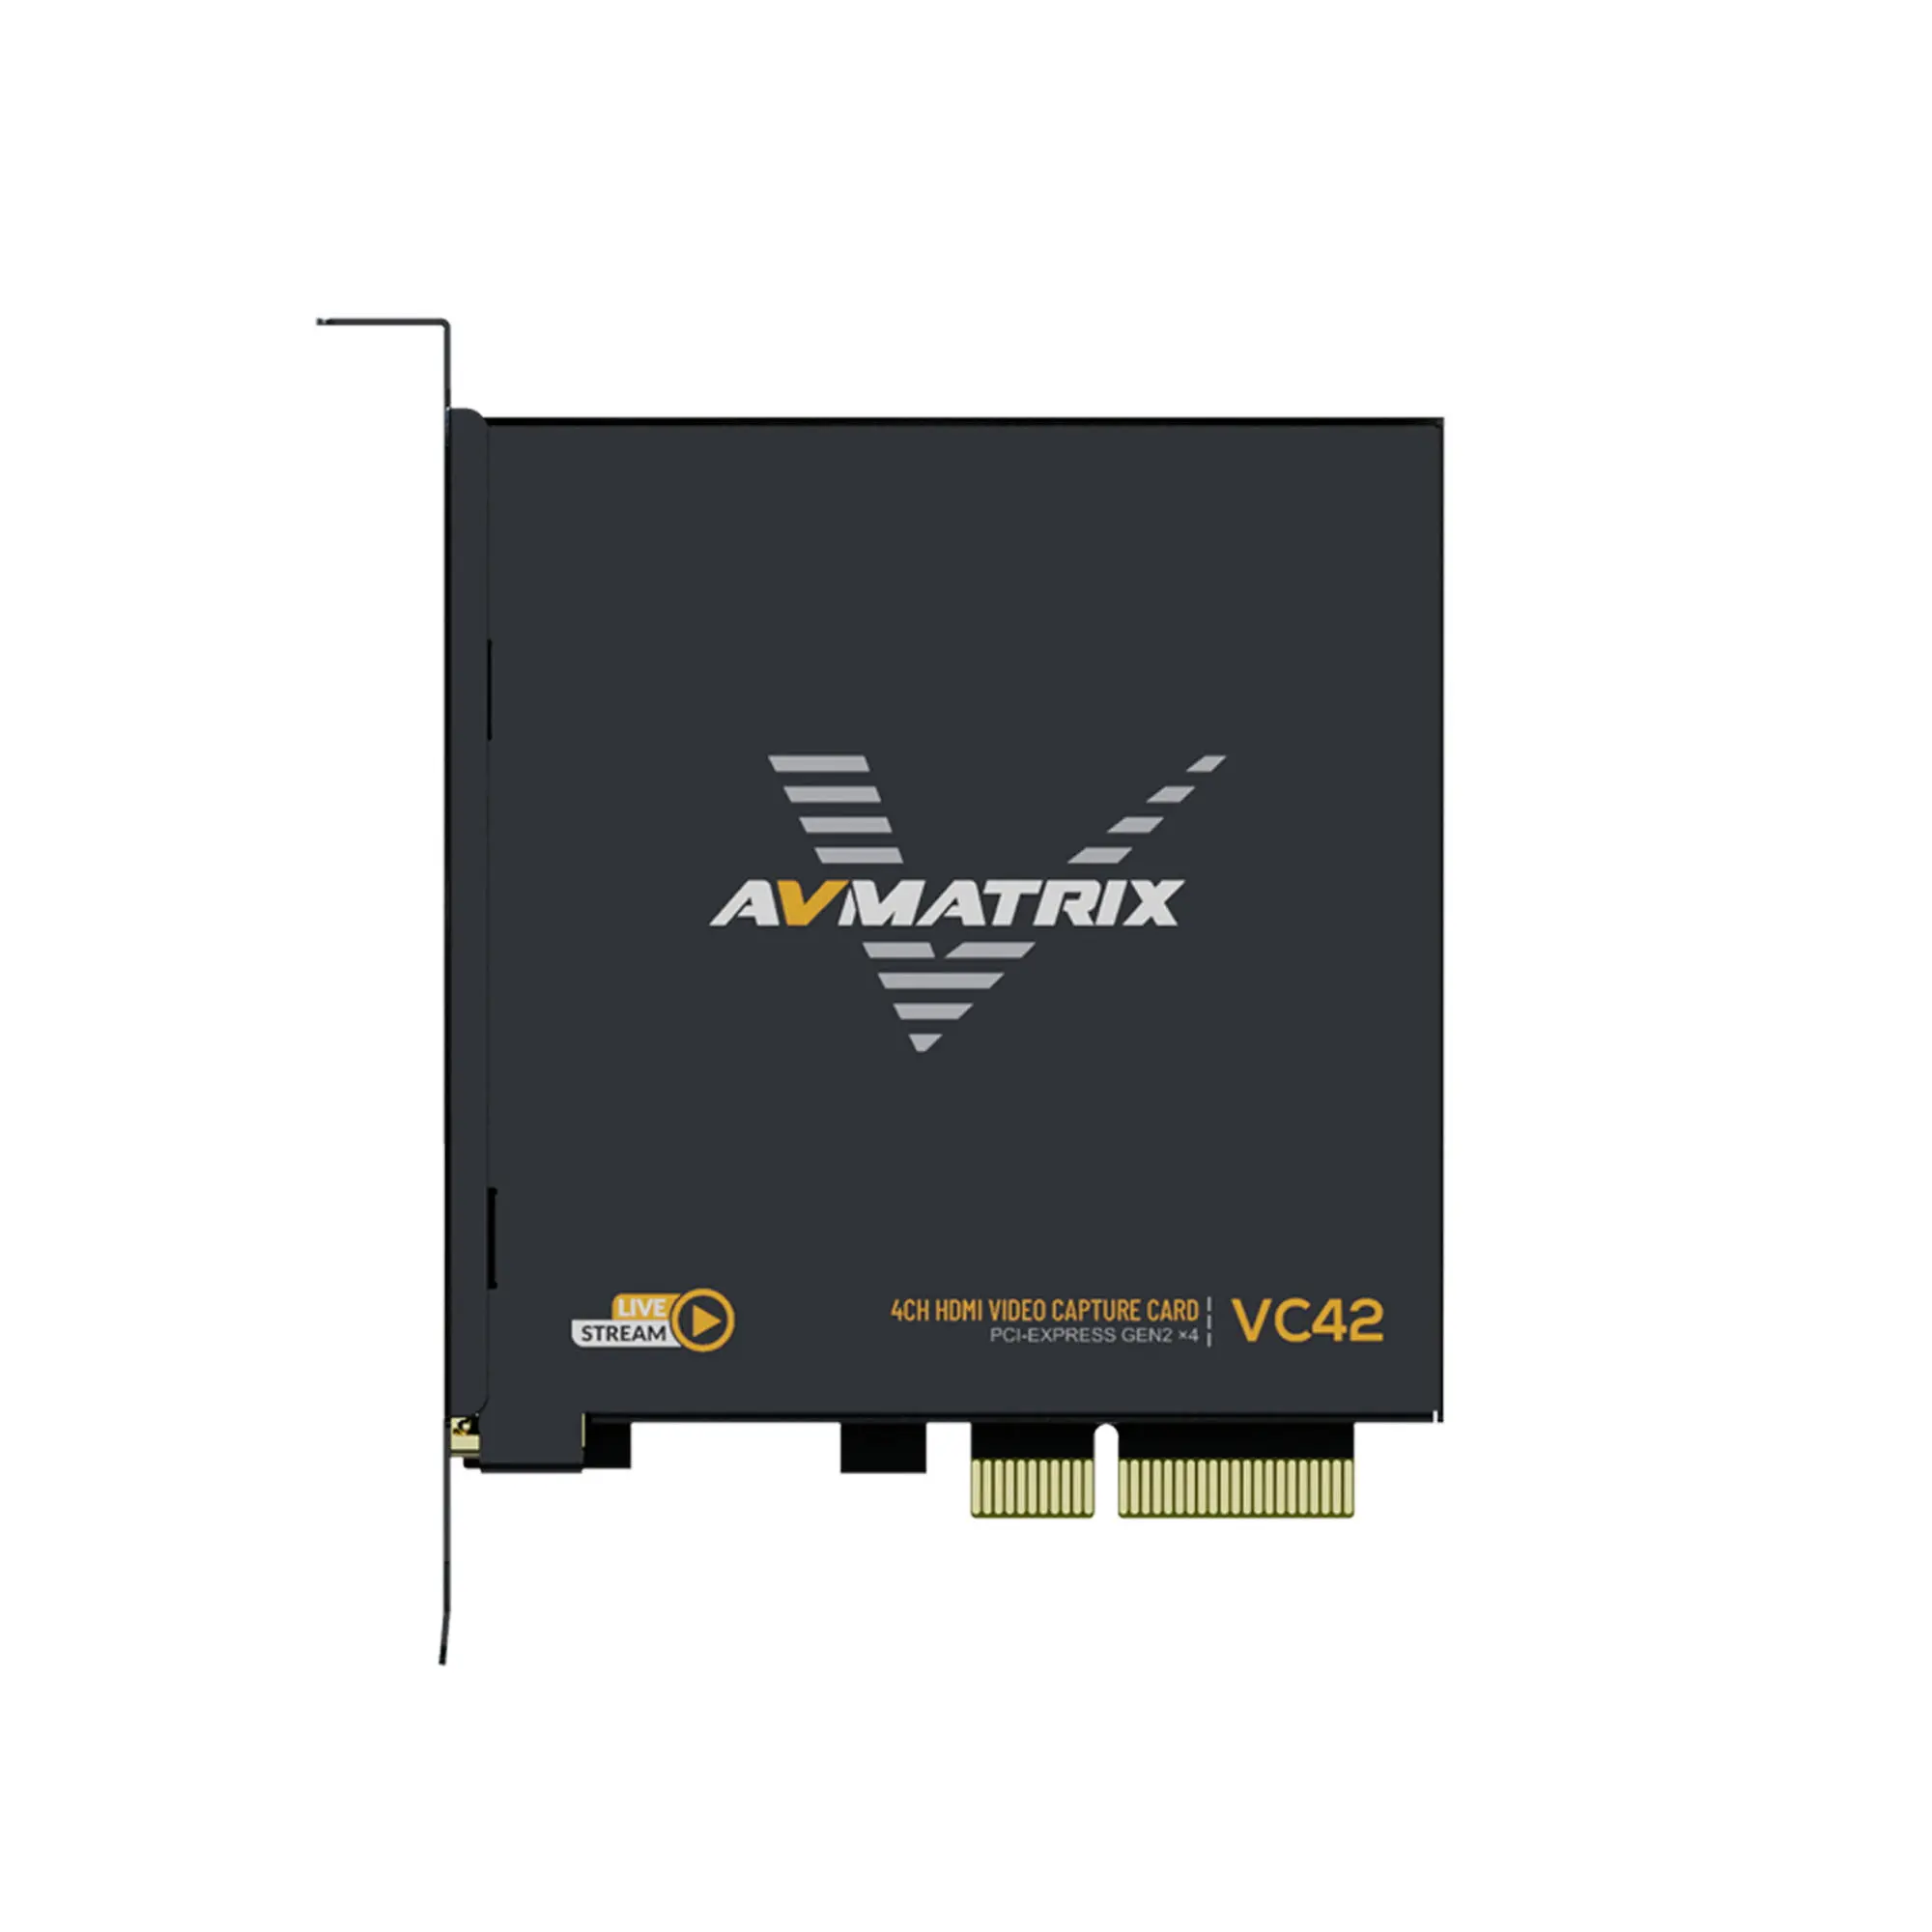 AVMATRIX-tarjeta de captura de videojuegos VC42, 4 canales, HDMI, 1080p60, Vmix, OBS, Streaming, Win7, Linux, transmisión en vivo